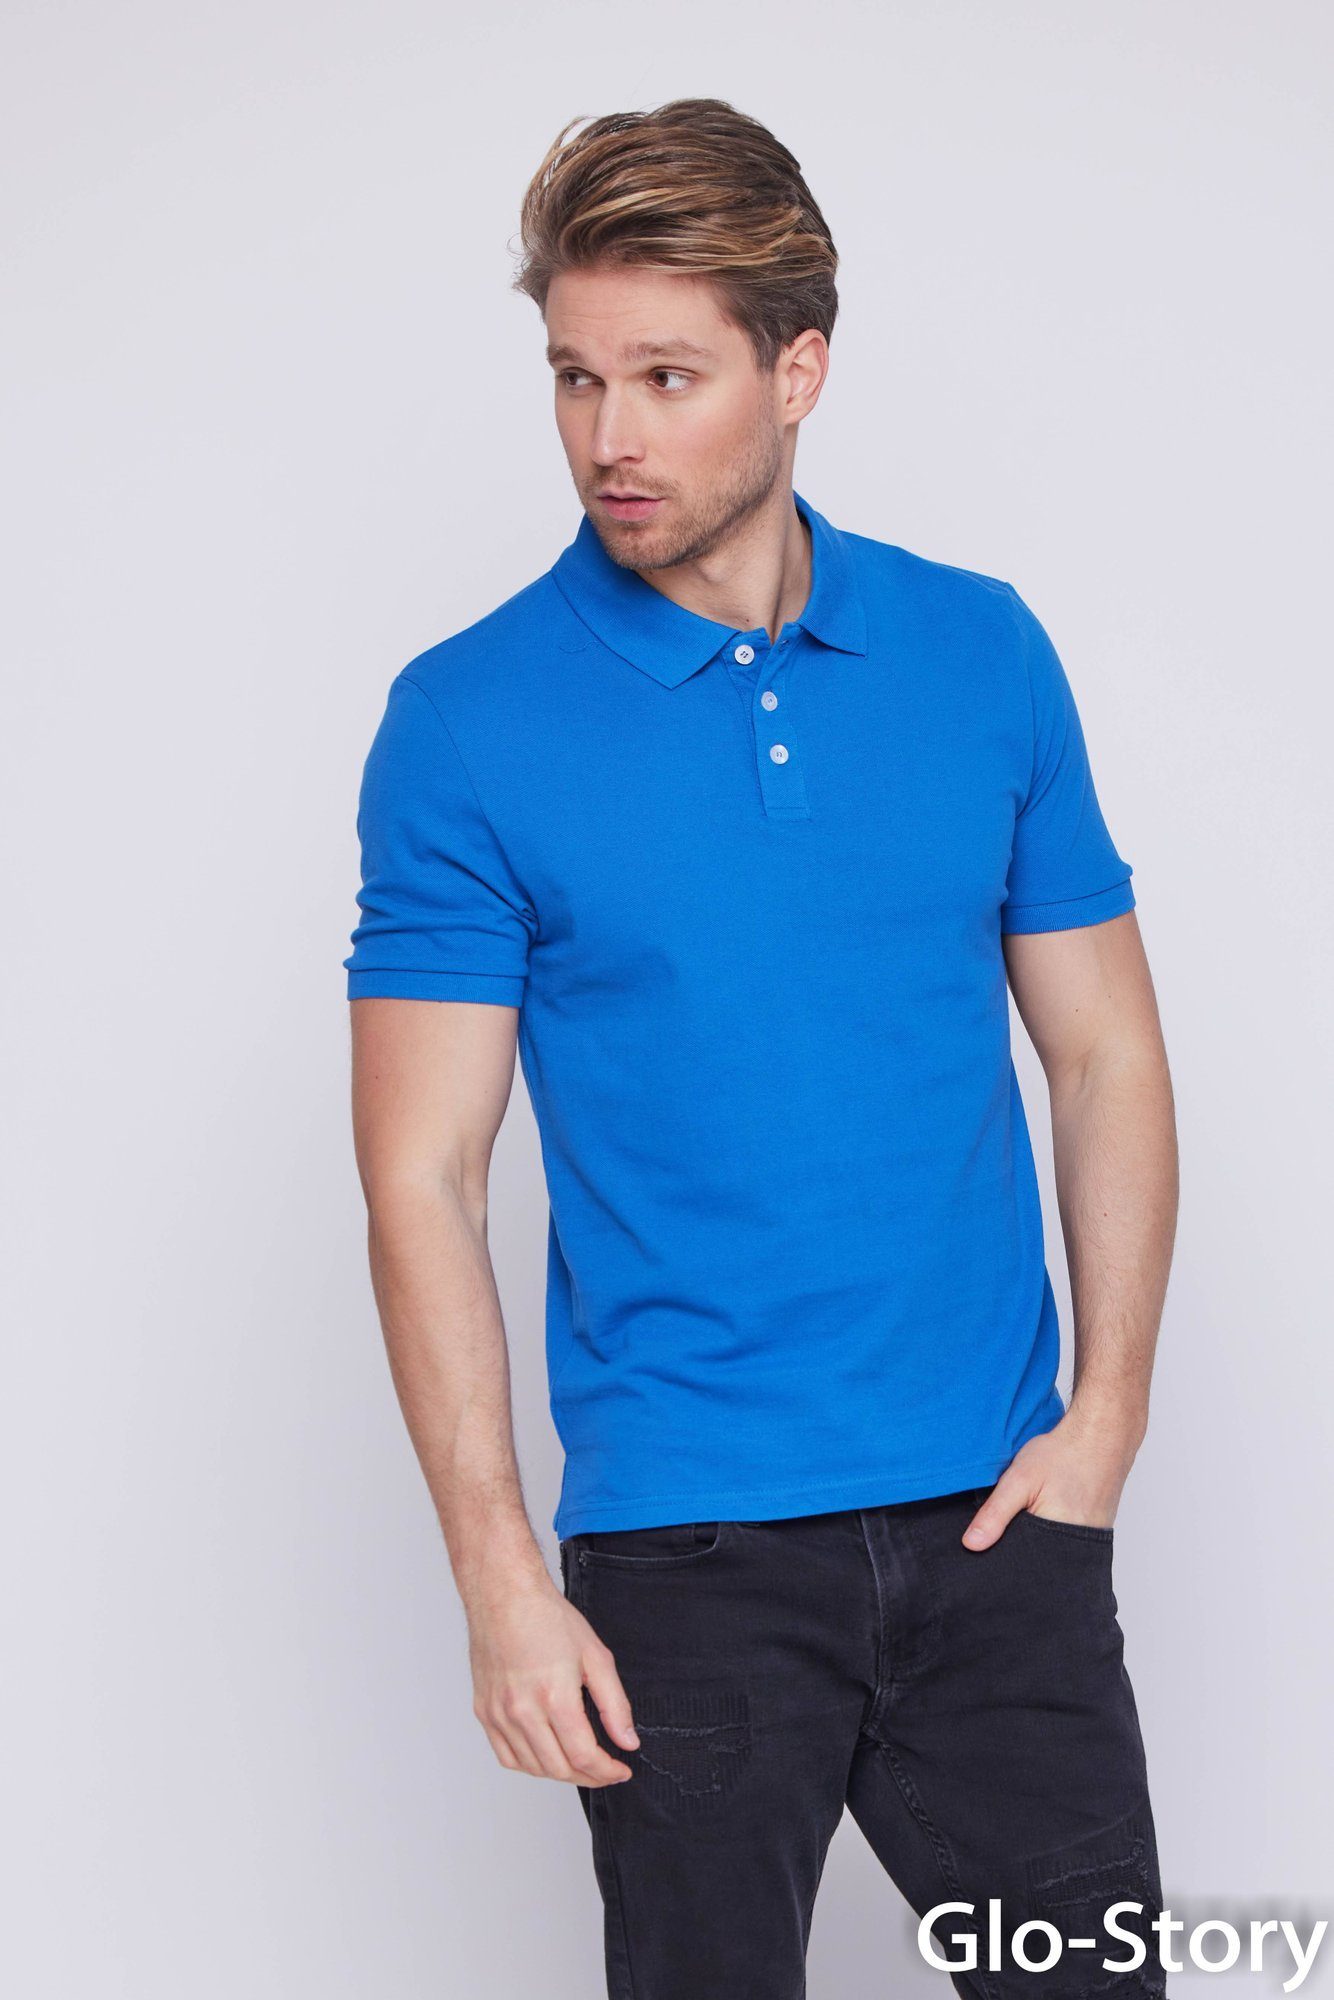 GLO-STORY Poloshirt GLO-STORY Herren Poloshirt Basic Kurzarm Polohemd Polo Shirt Regular Sapphire-Blau